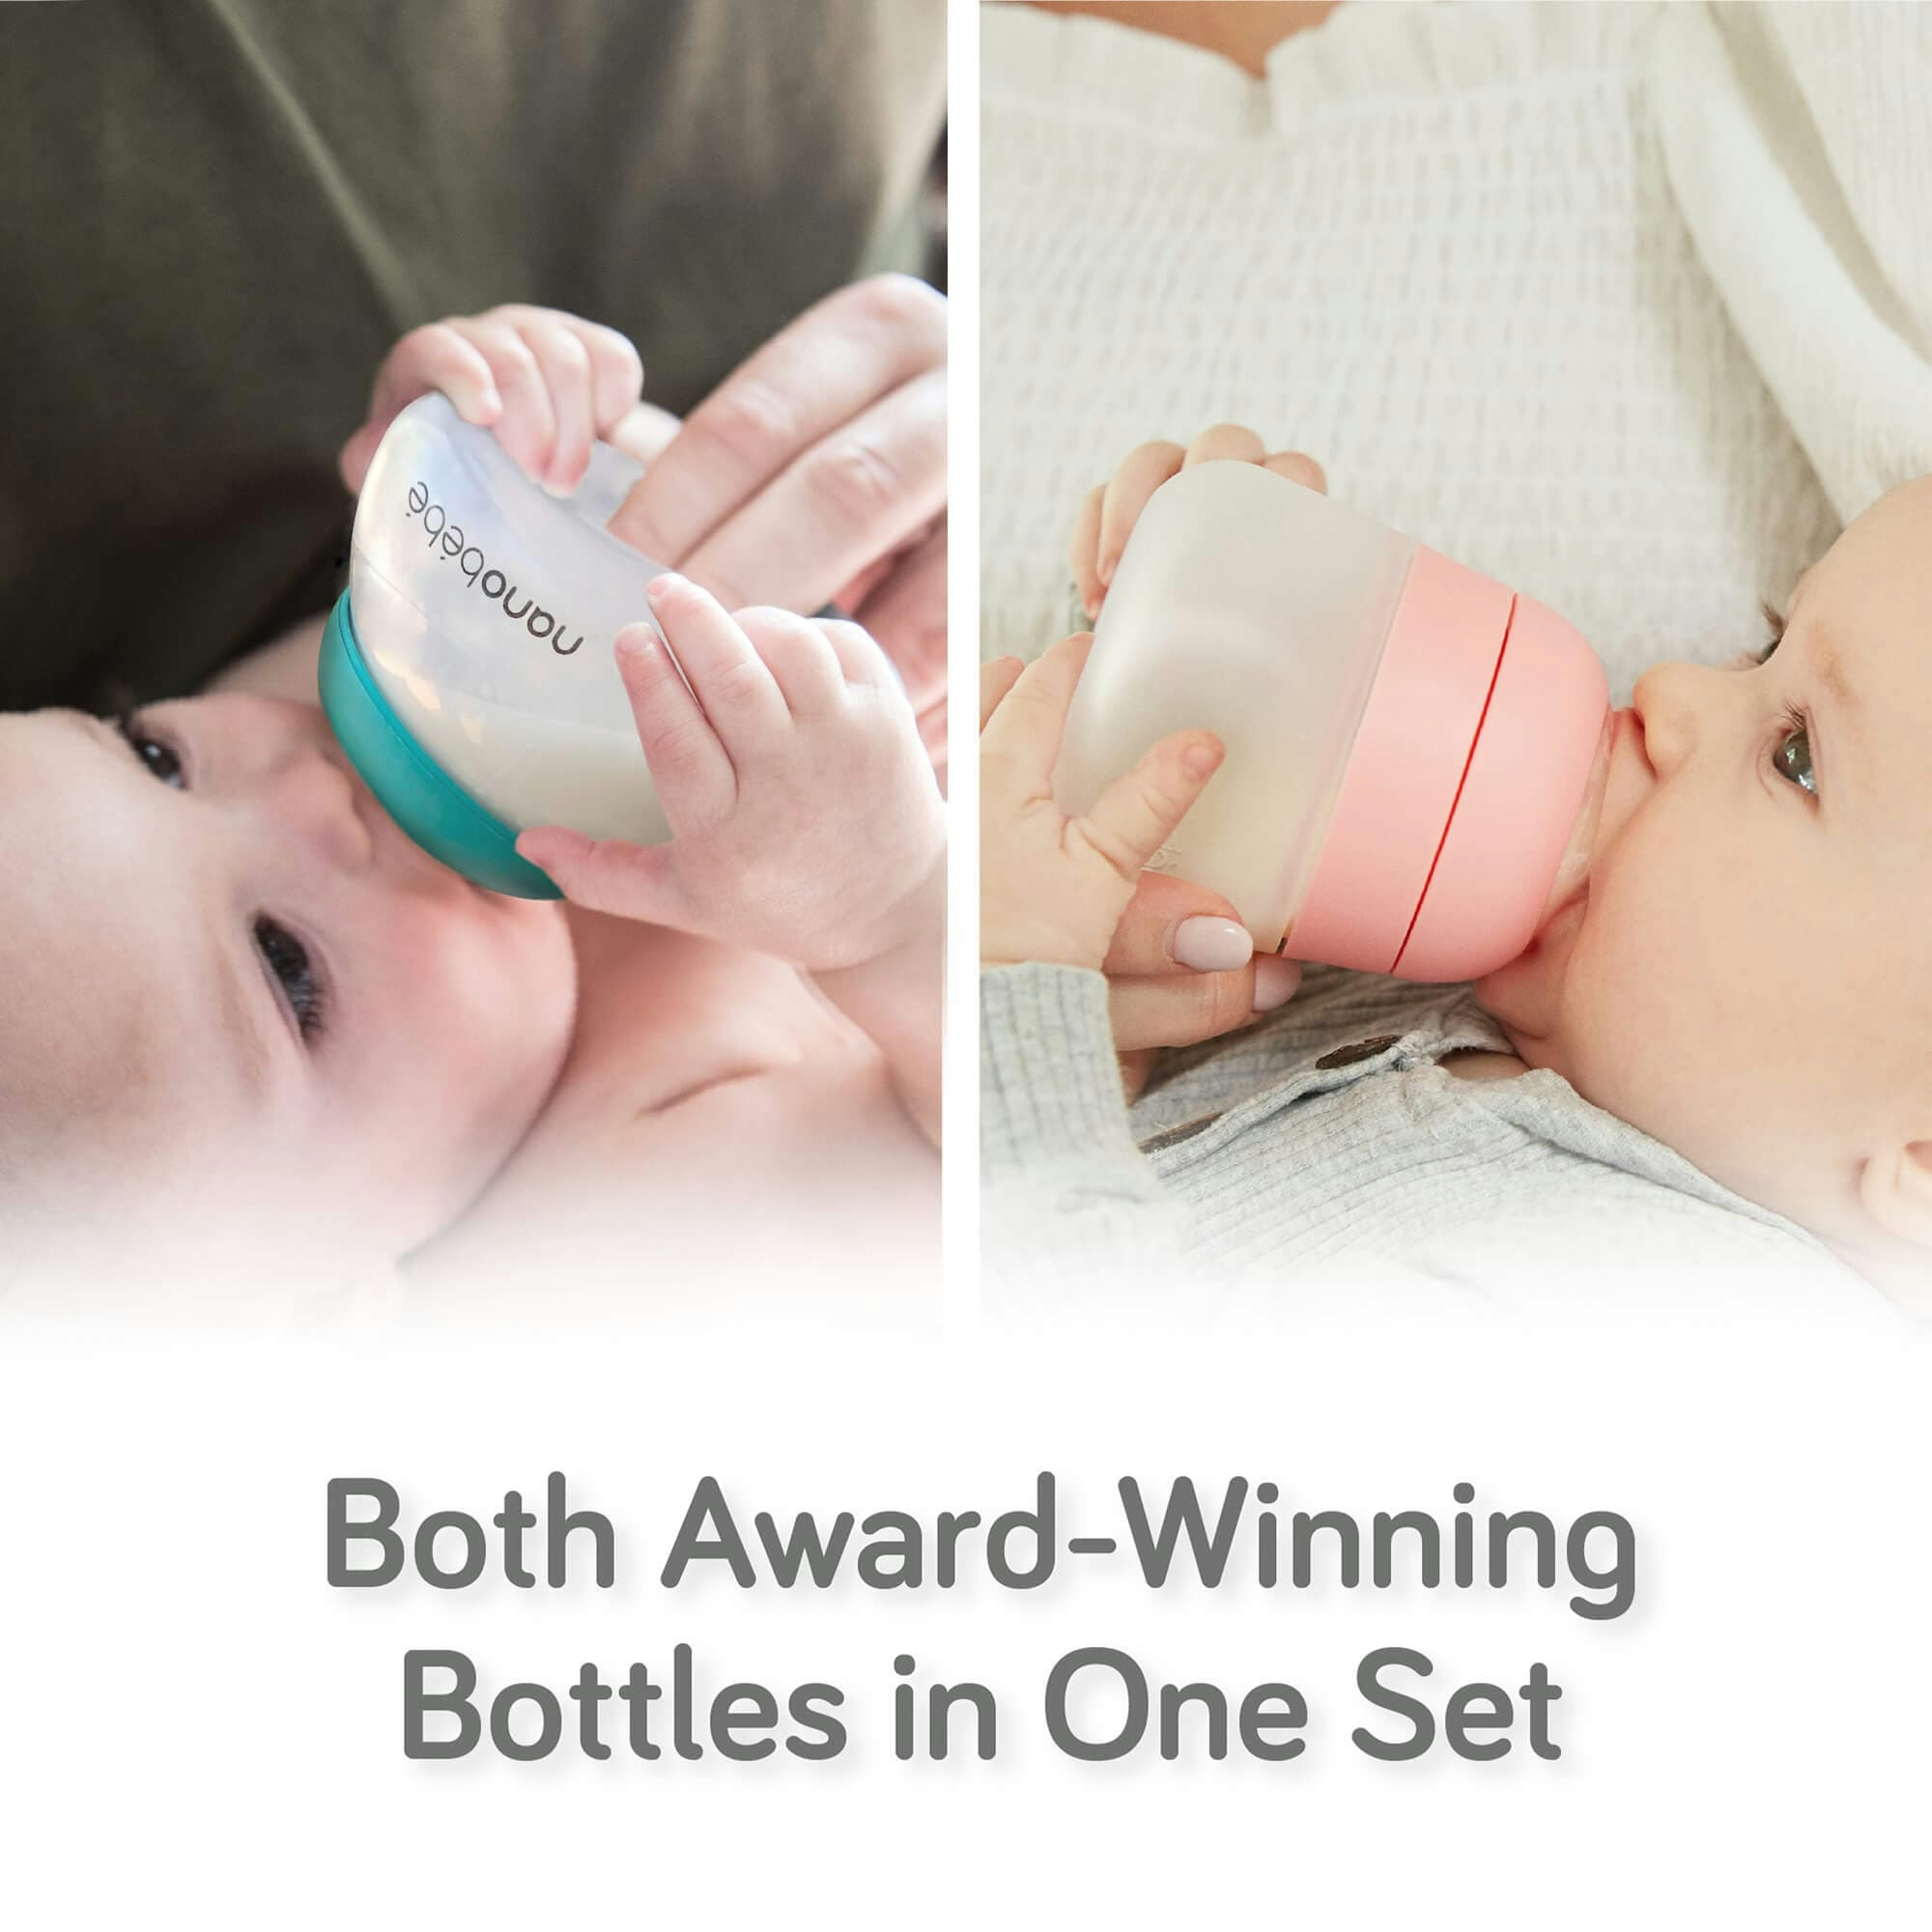 Nanobébé US Teal Ultimate Newborn Baby Bottle Feeding Set